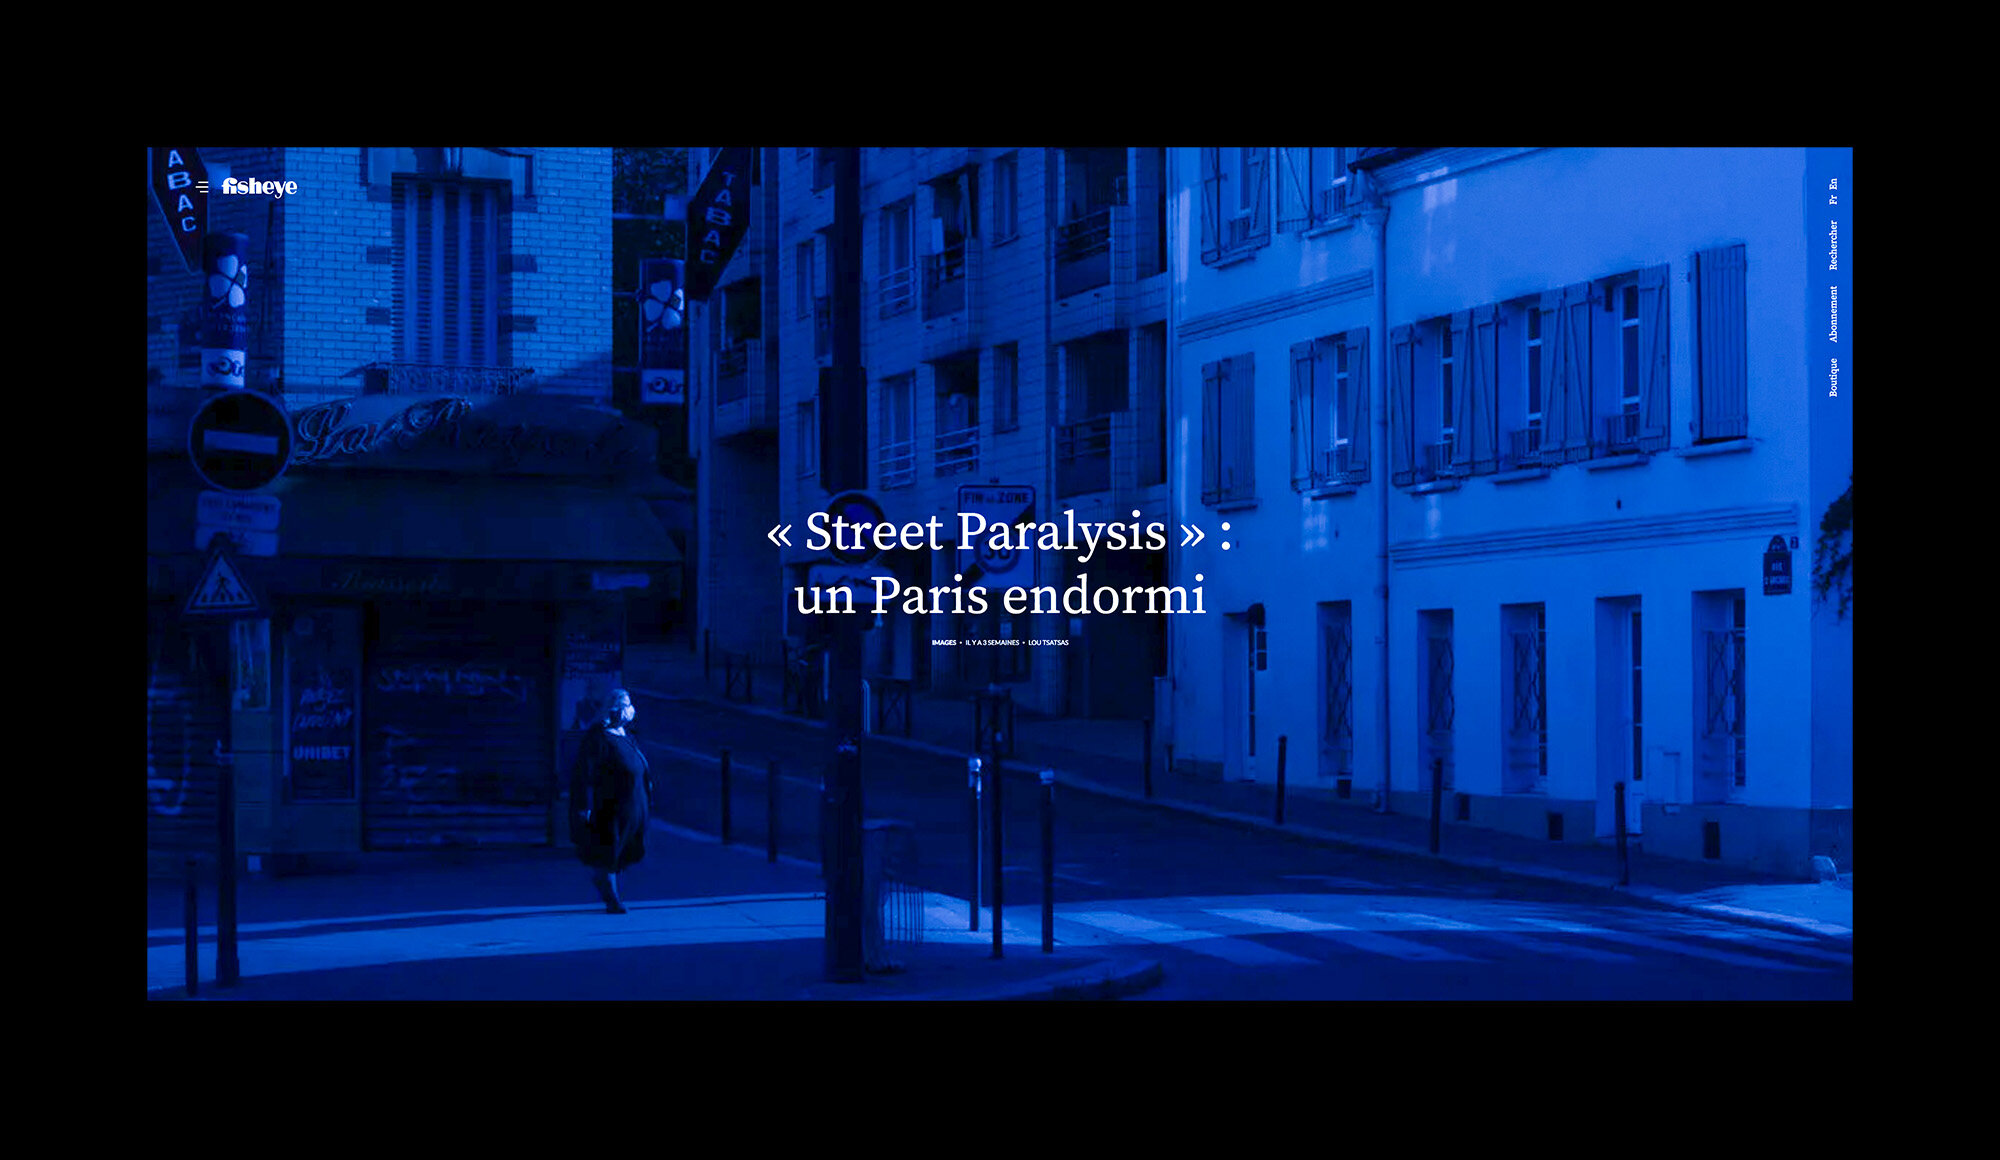  29/4/2020:  Street Paralysis  on Fisheye 